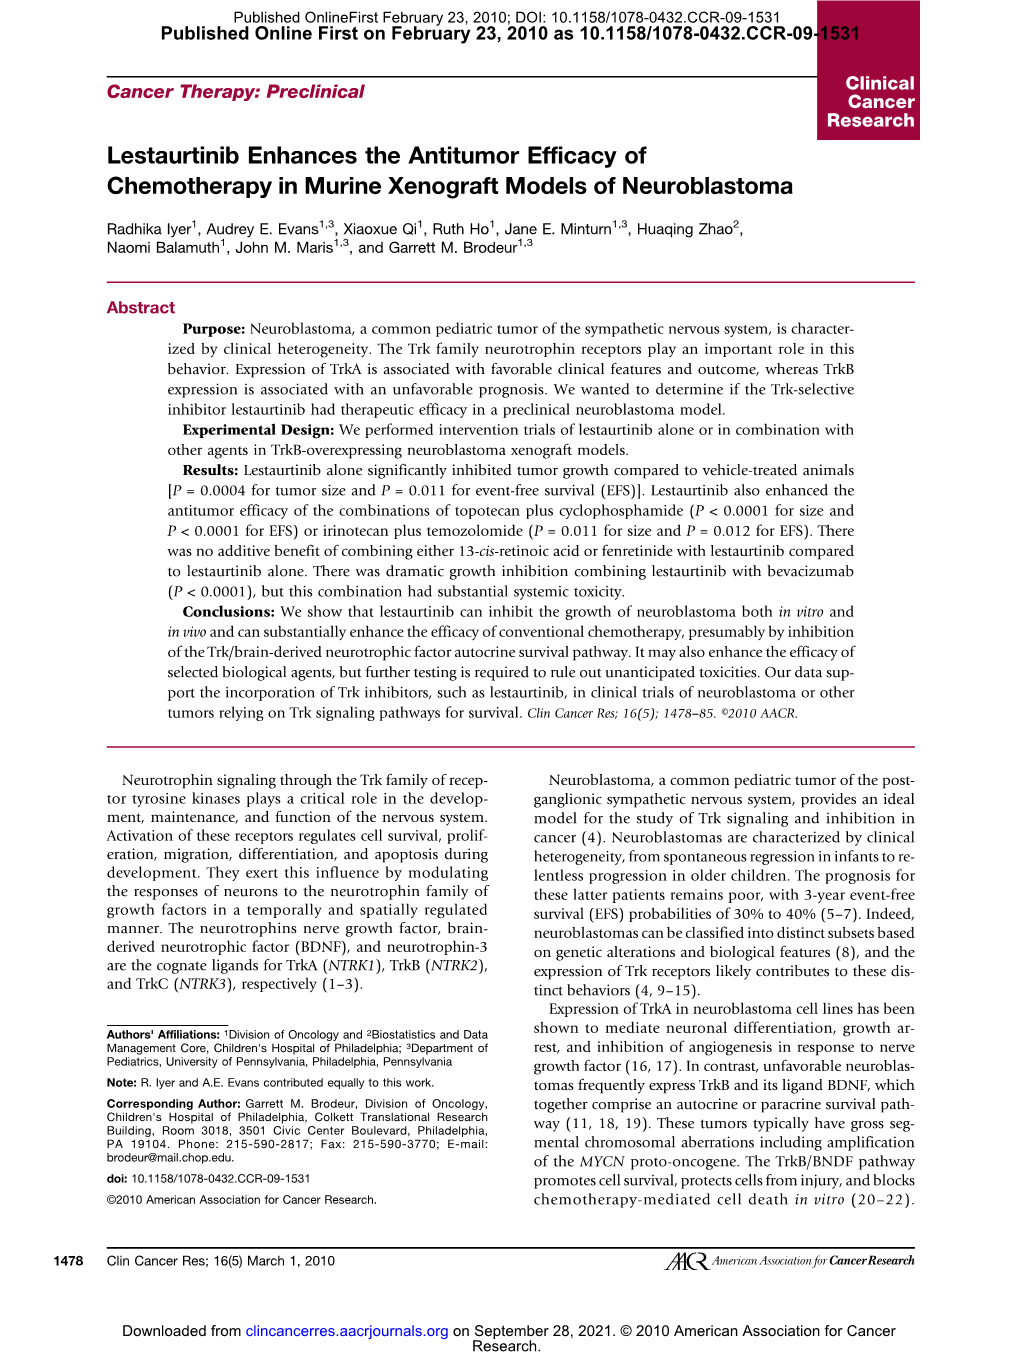 Lestaurtinib Enhances the Antitumor Efficacy of Chemotherapy in Murine Xenograft Models of Neuroblastoma